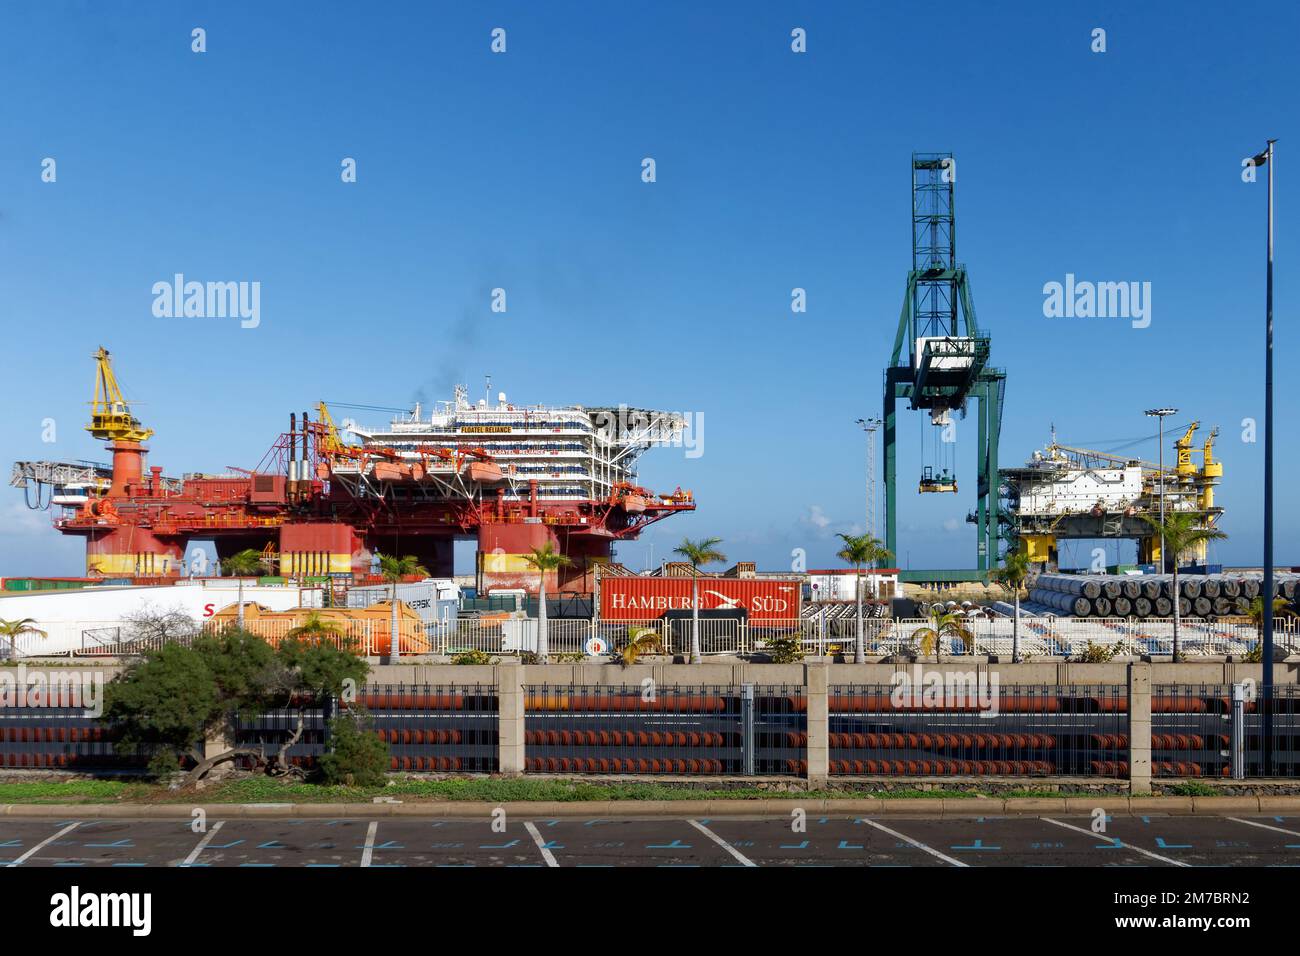 Commercial port in Santa Cruz de Tenerife, Spain. Stock Photo